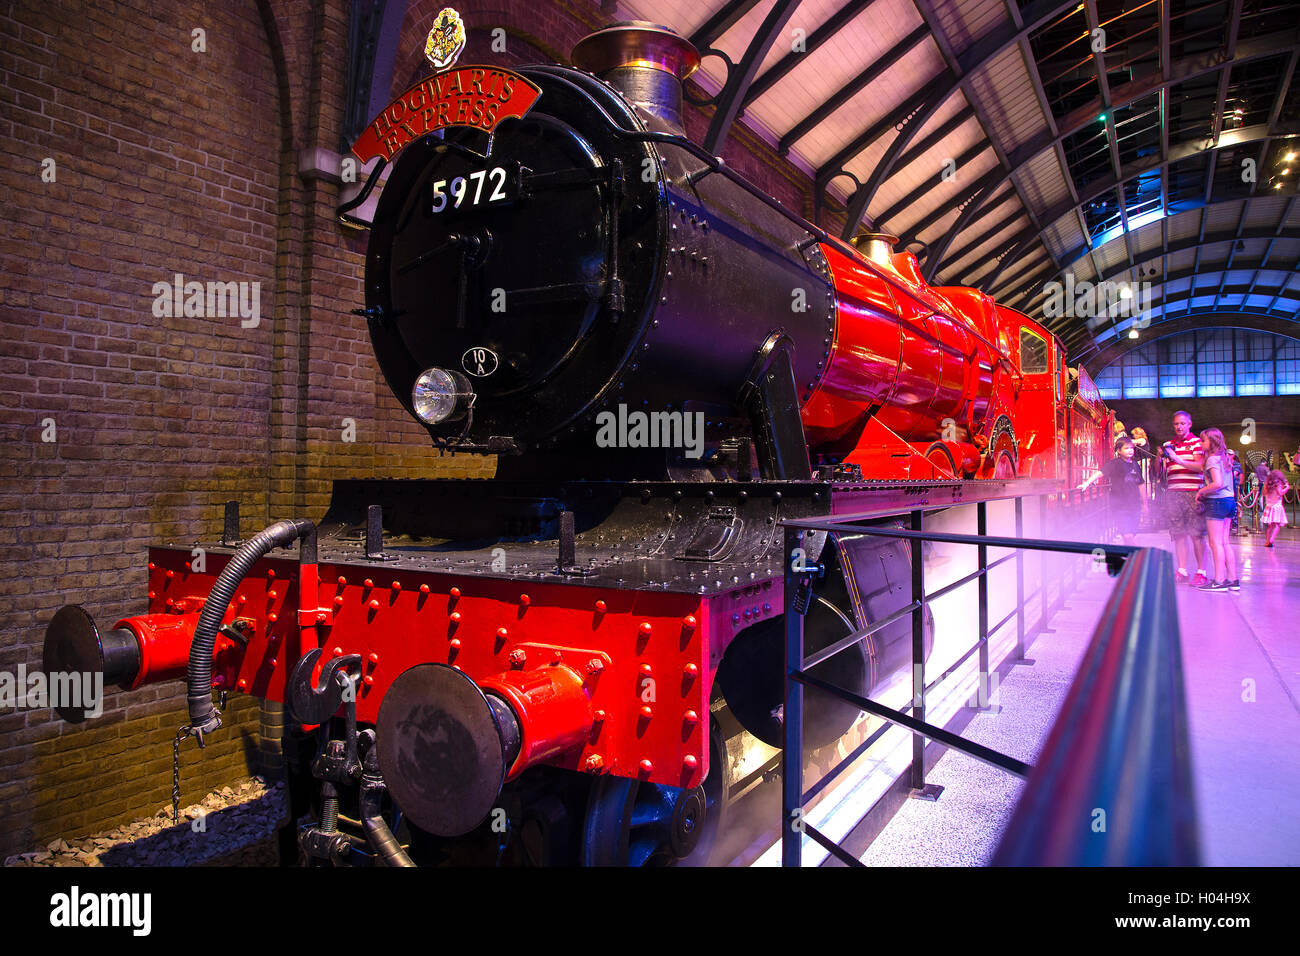 Poudlard Express train, Warner Brothers Studio Tour, la fabrication d'Harry Potter, Londres Banque D'Images